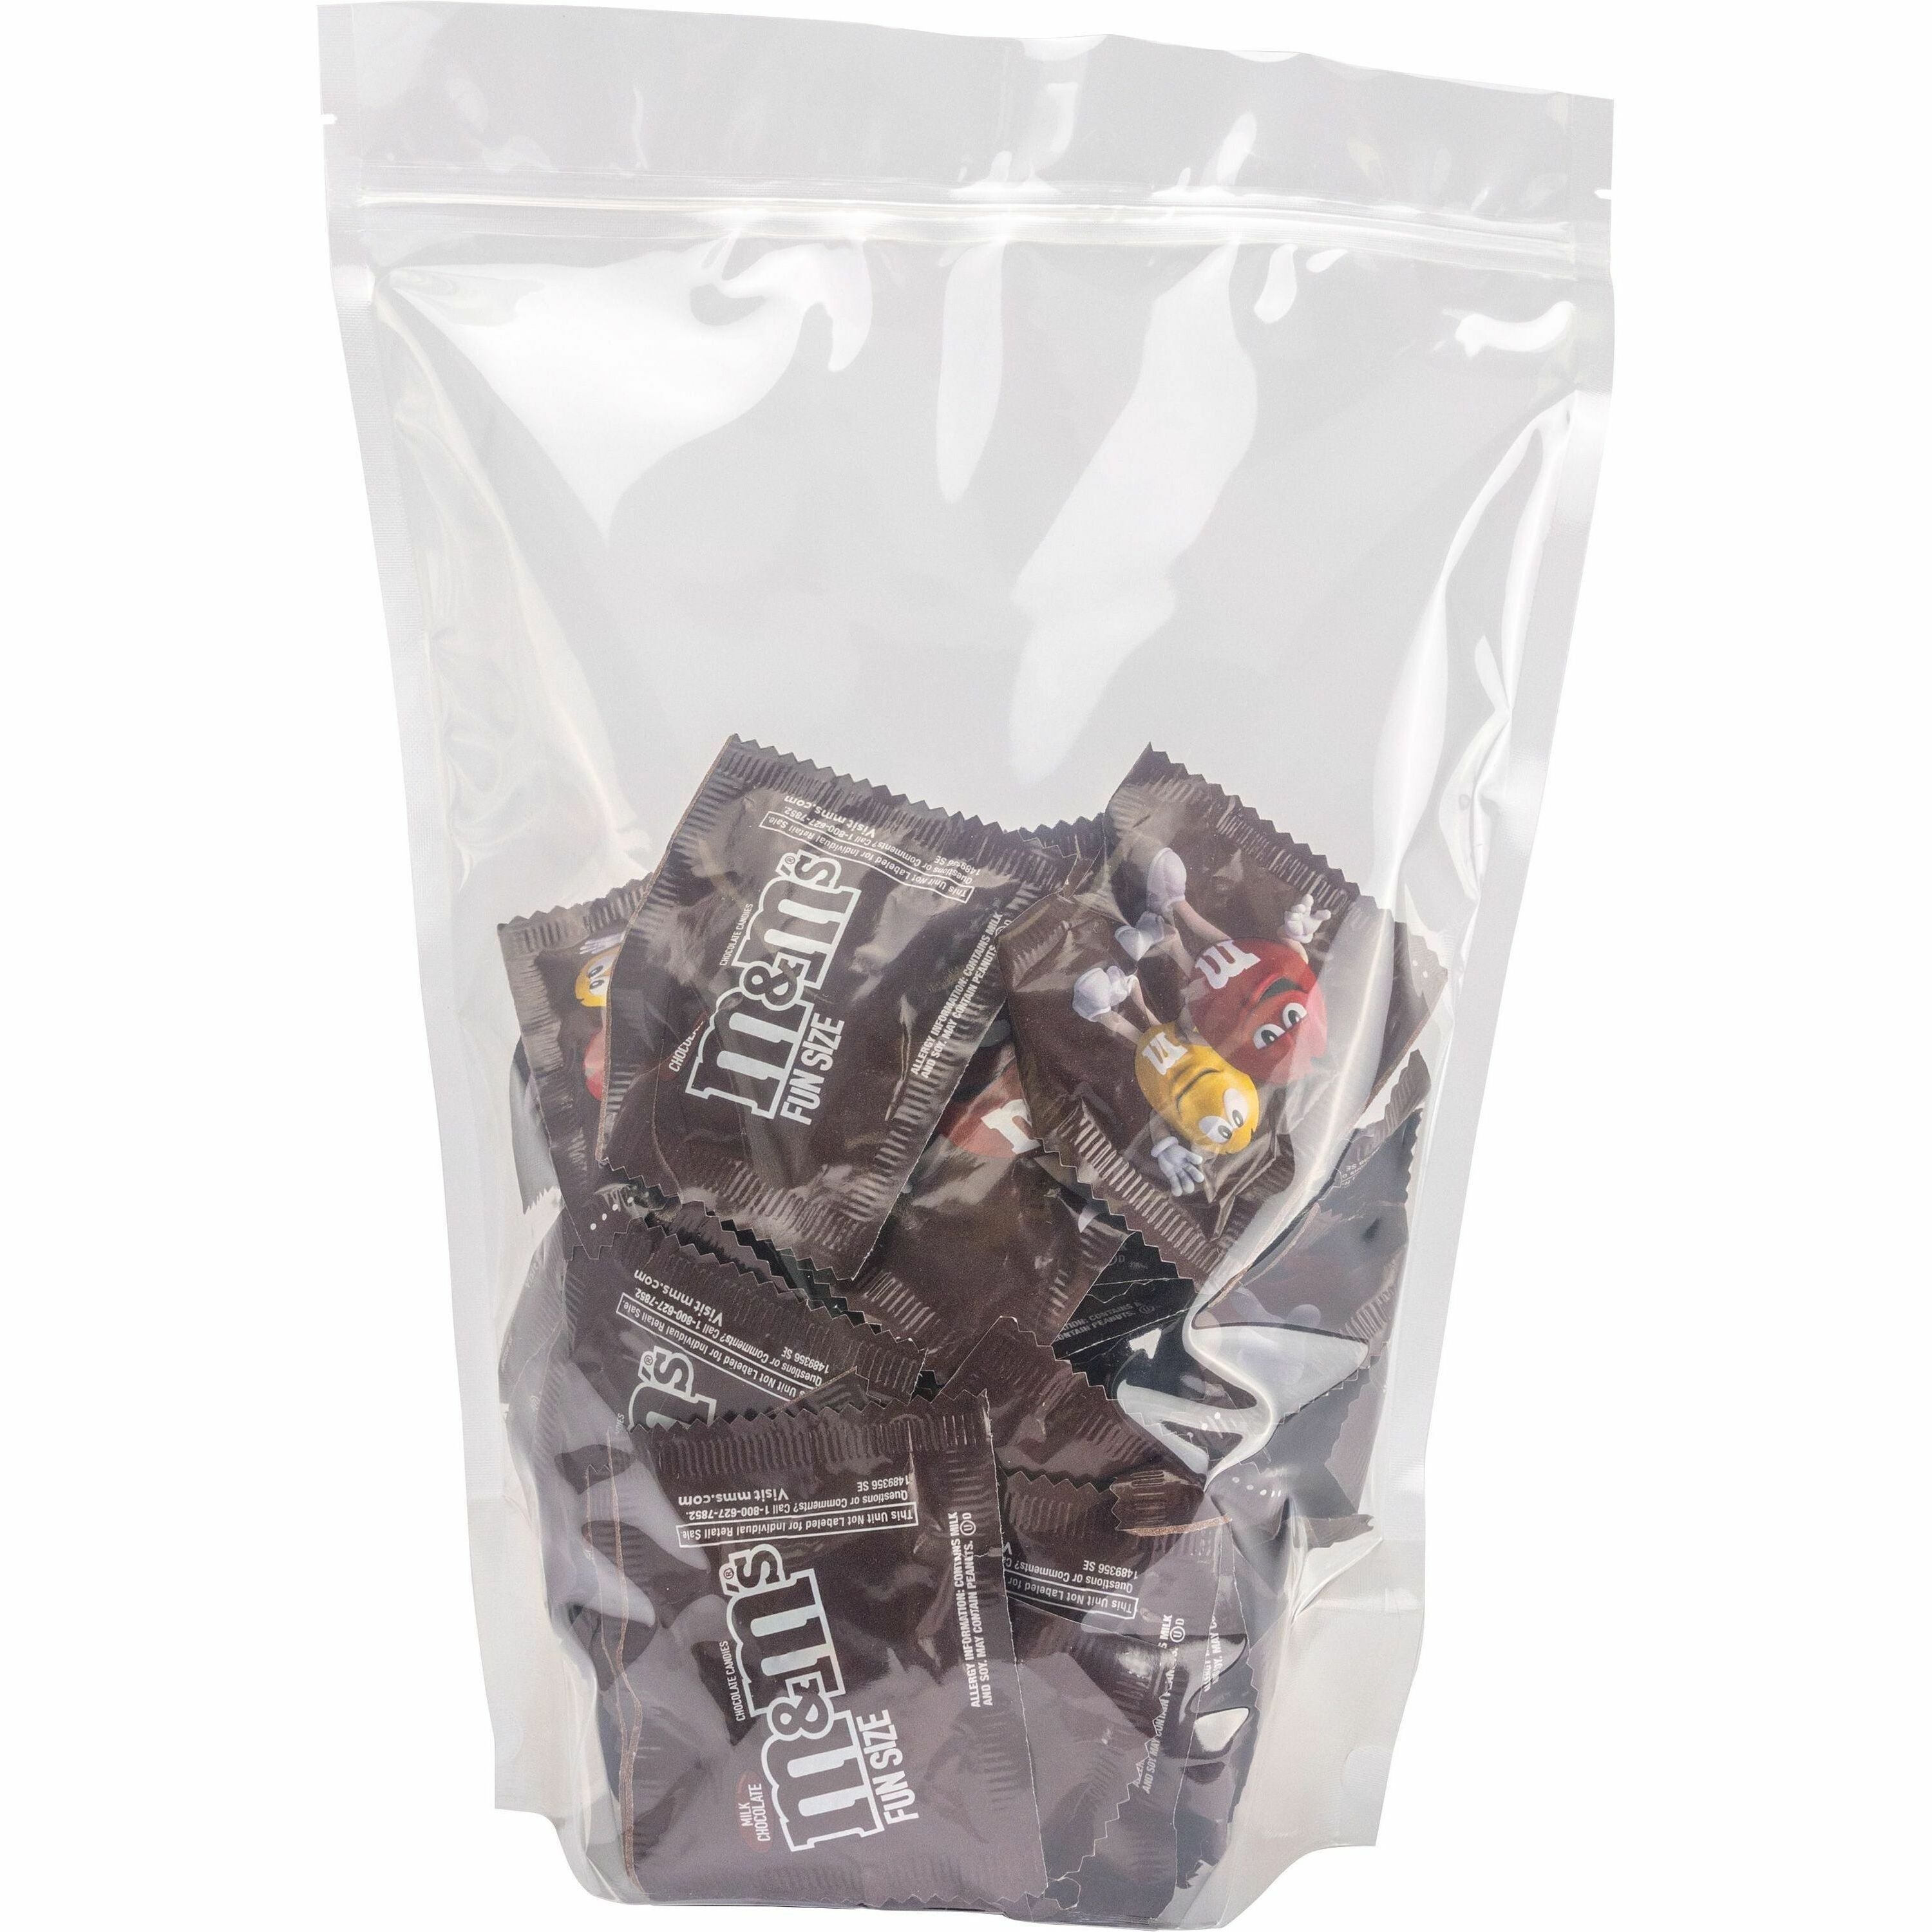 Penny Candy M&M's Orignal - Chocolate - 2 lb - 1 Bag